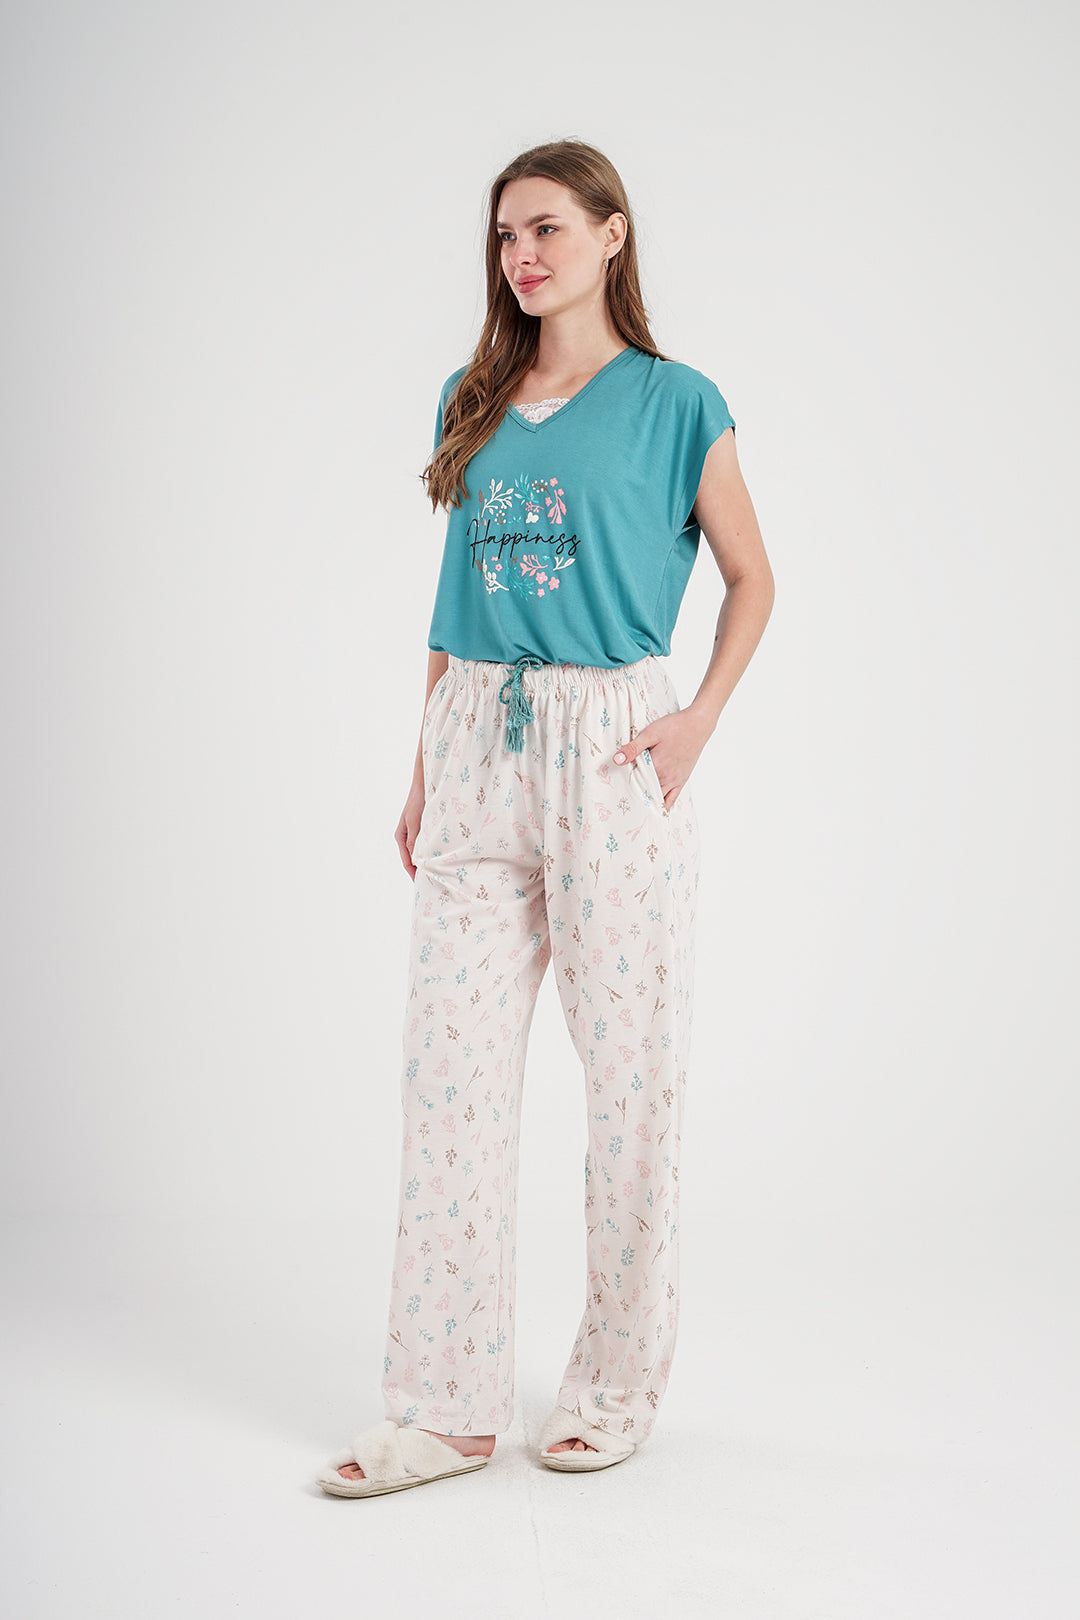 Happiness Women's Pajama Pants Modal Lycra